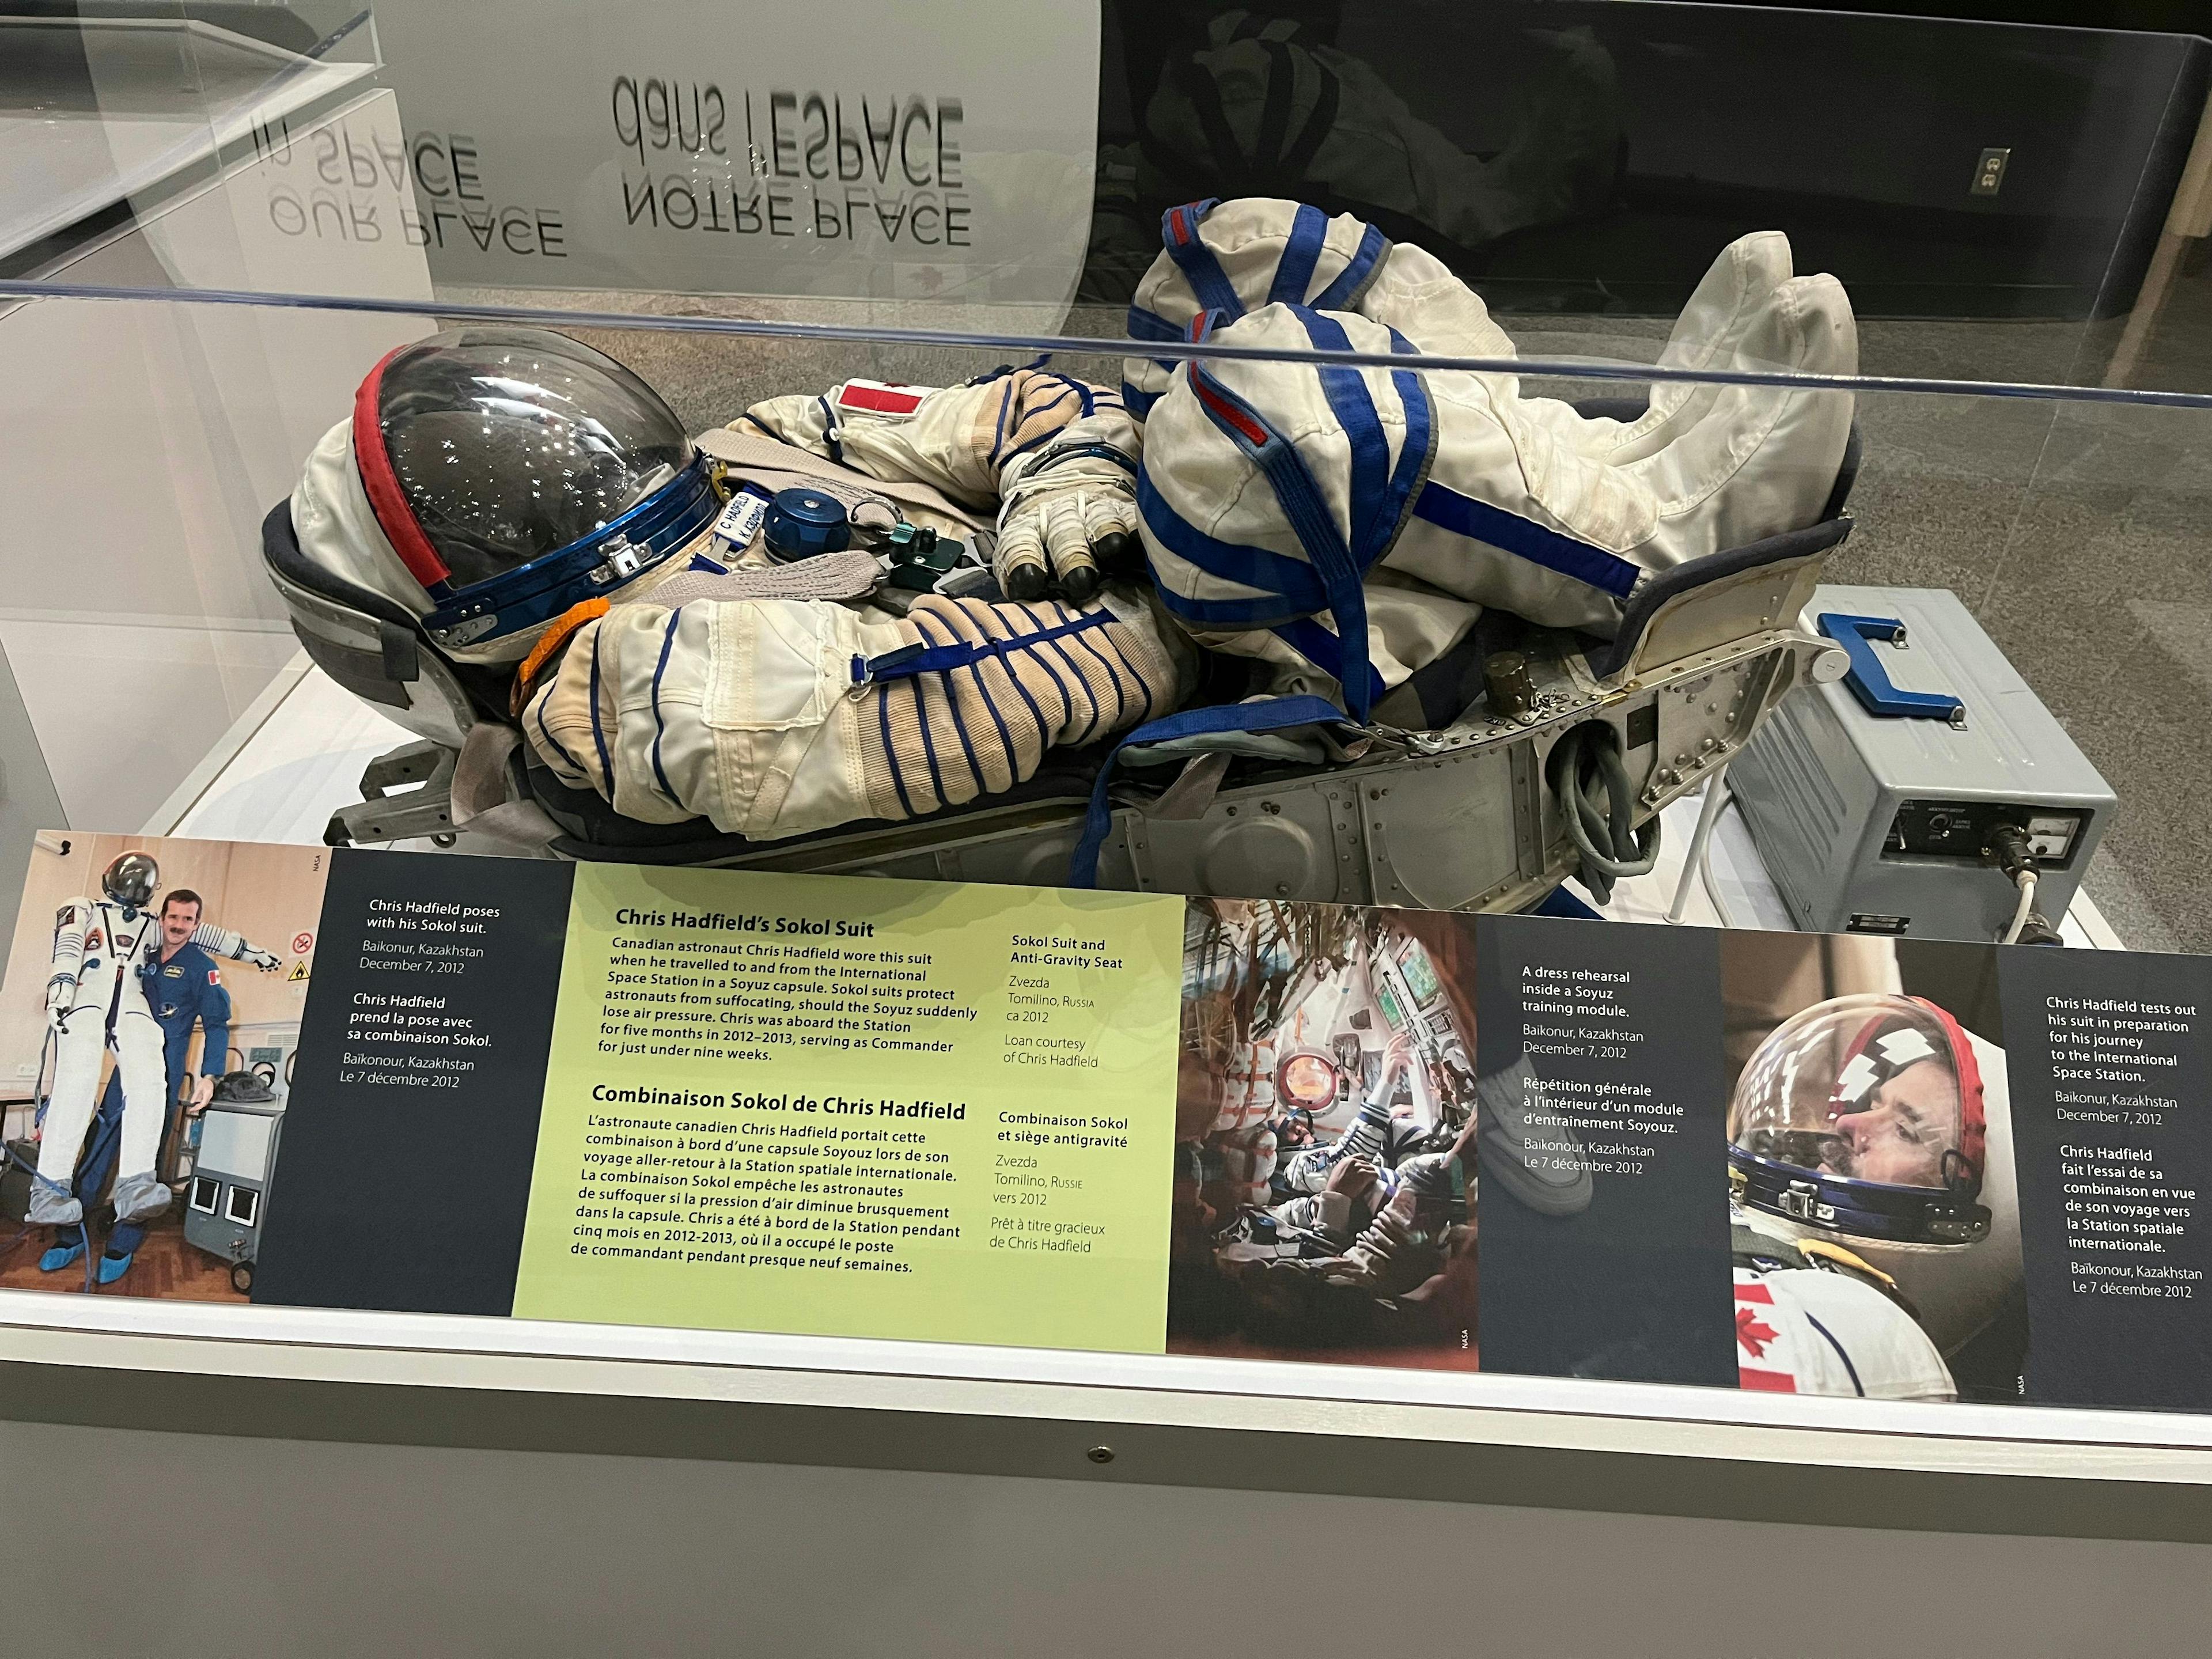 Chris Hadfields's Space suit 🤩